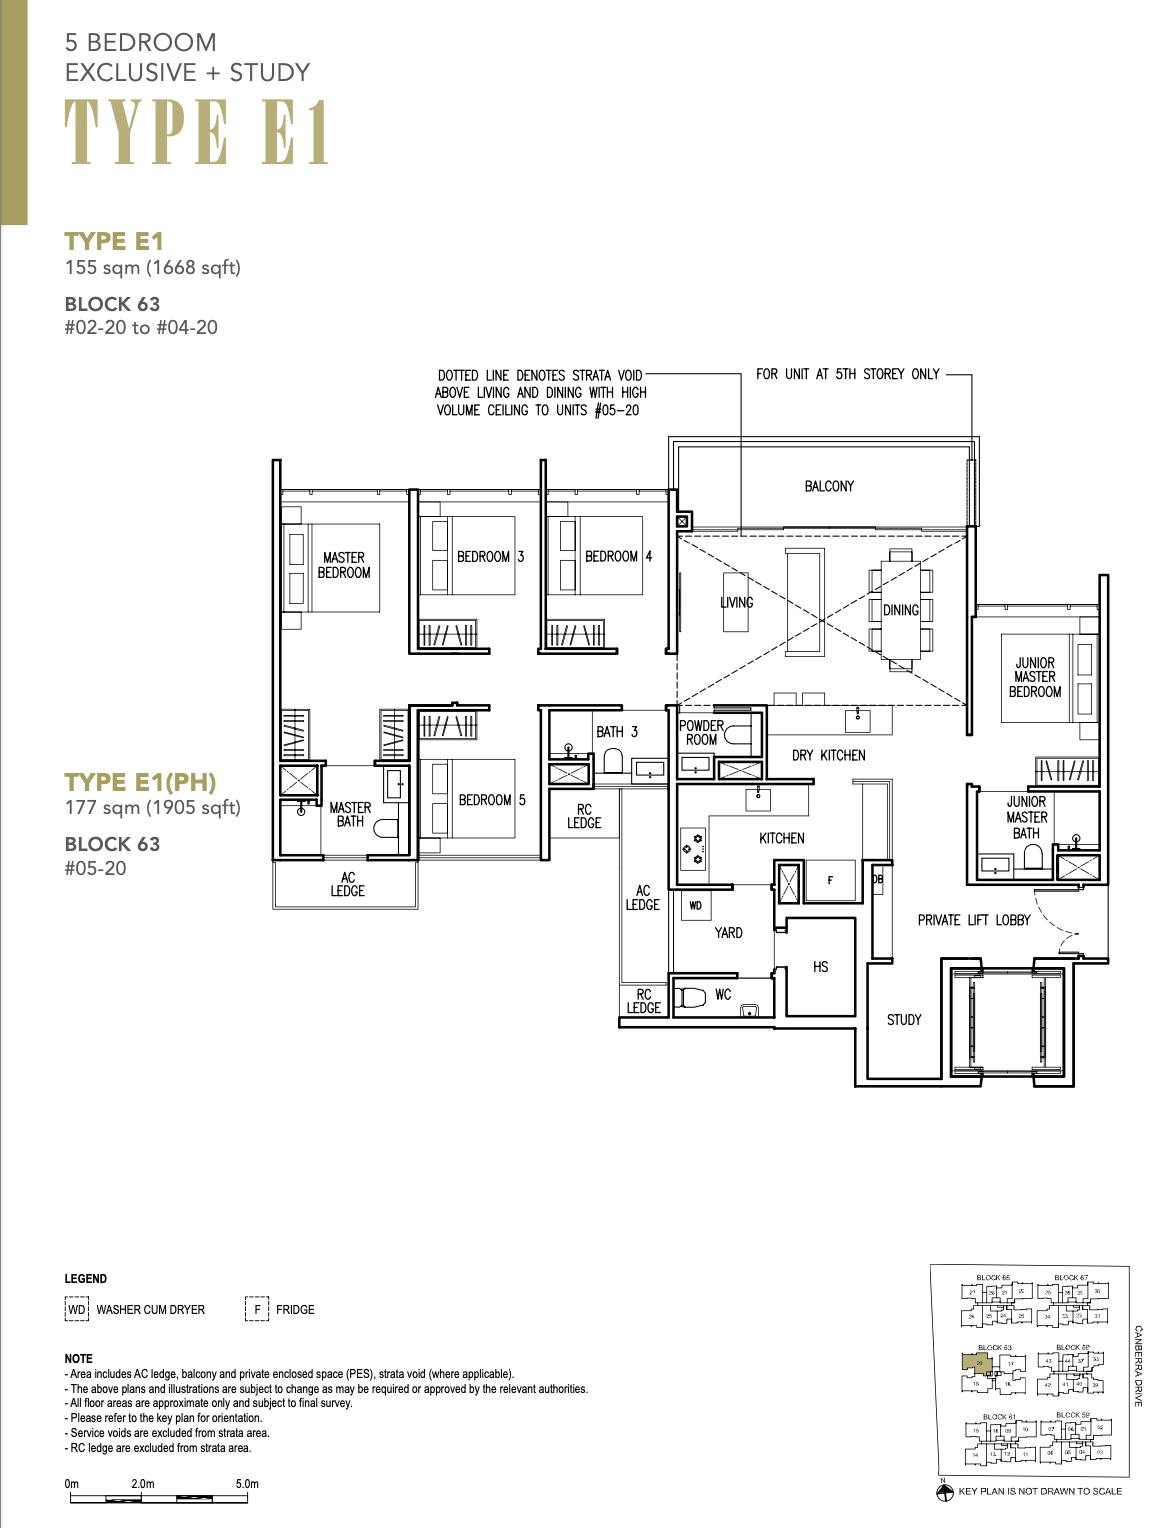 the commodore 5 bedroom executive + study floor plan